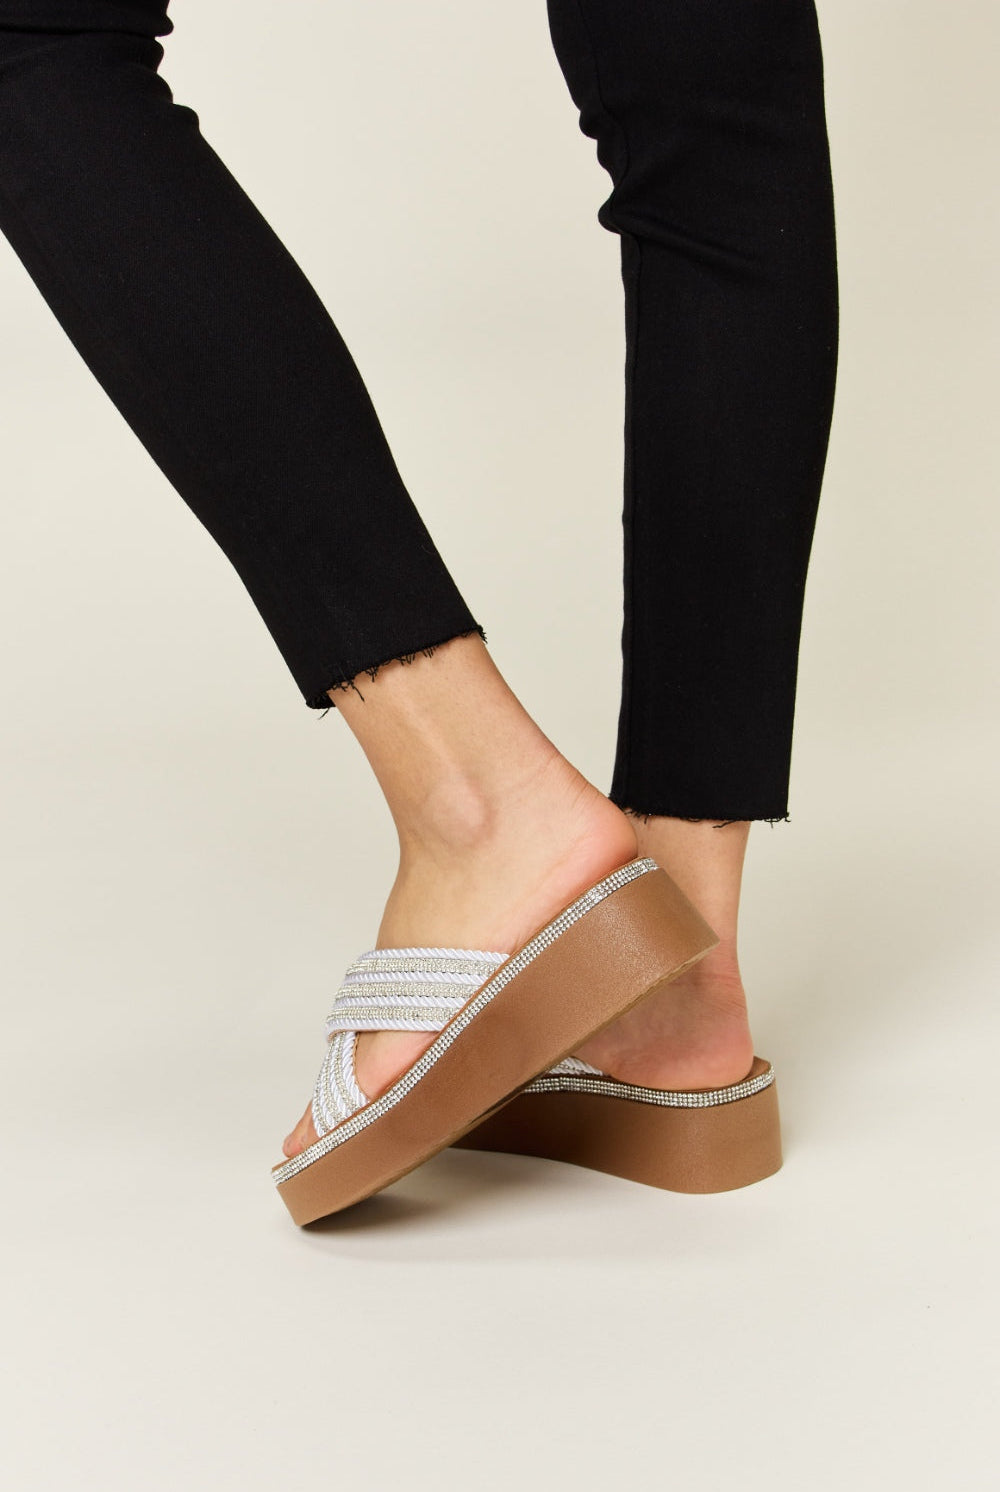 Rhinestone Comfort Platform Wedge Sandals-Krush Kandy, Women's Online Fashion Boutique Located in Phoenix, Arizona (Scottsdale Area)